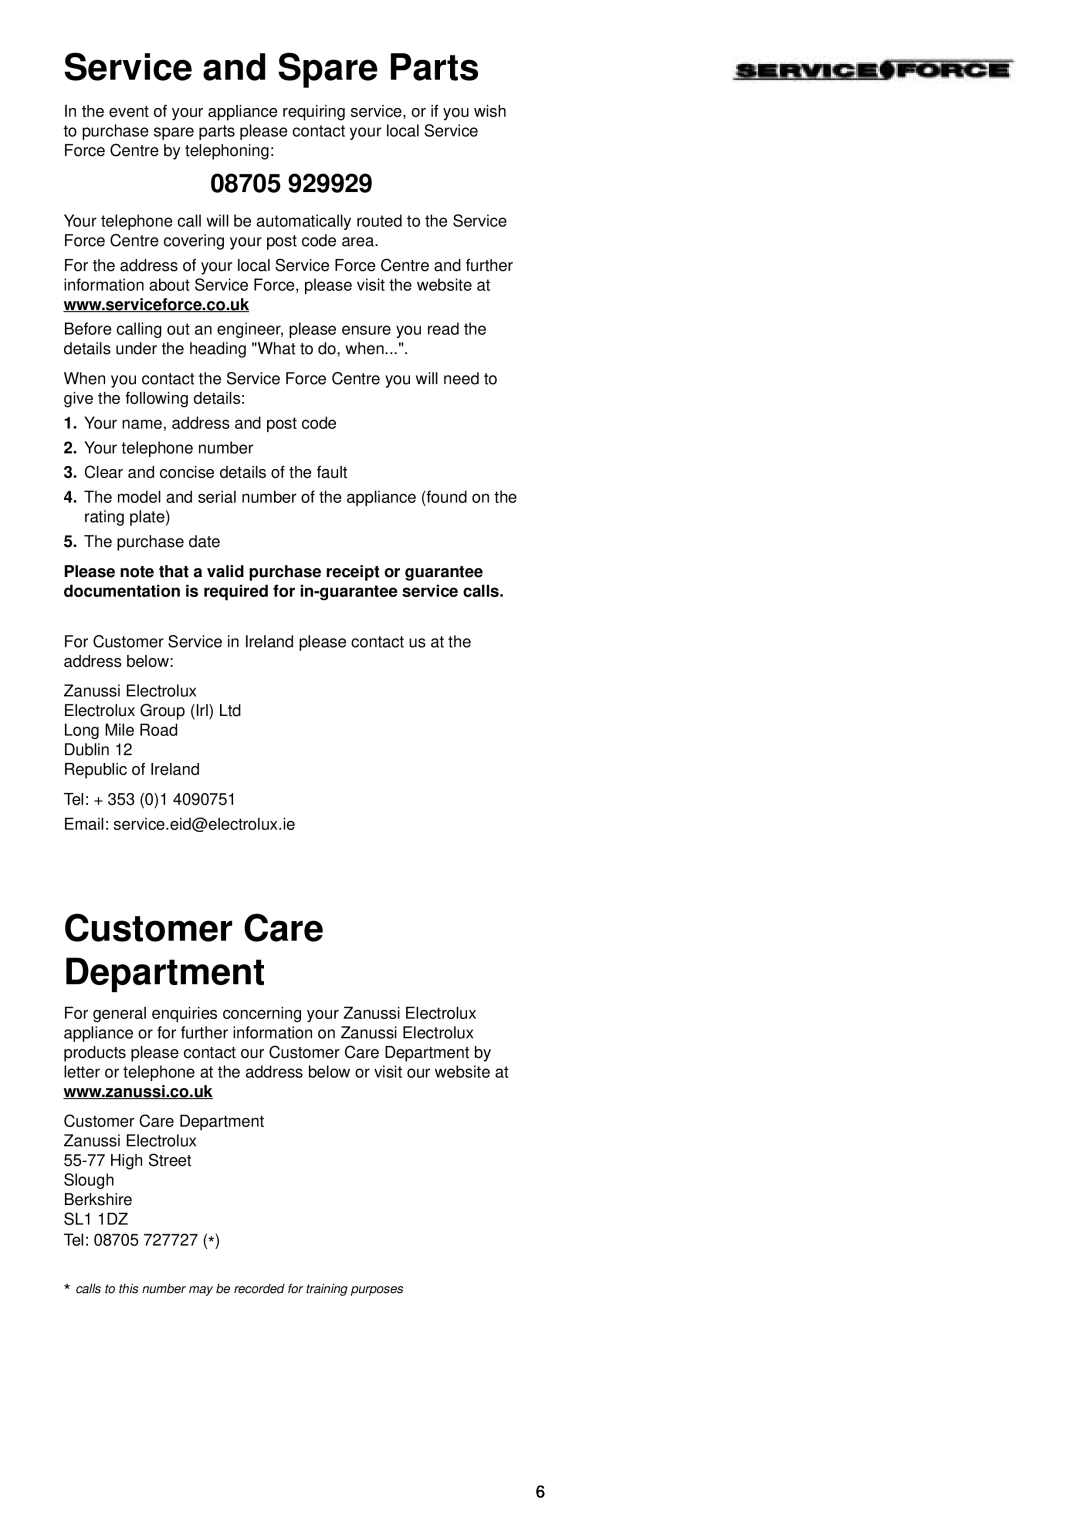 Zanussi DA 4131 manual Service and Spare Parts, Customer Care Department, 08705 